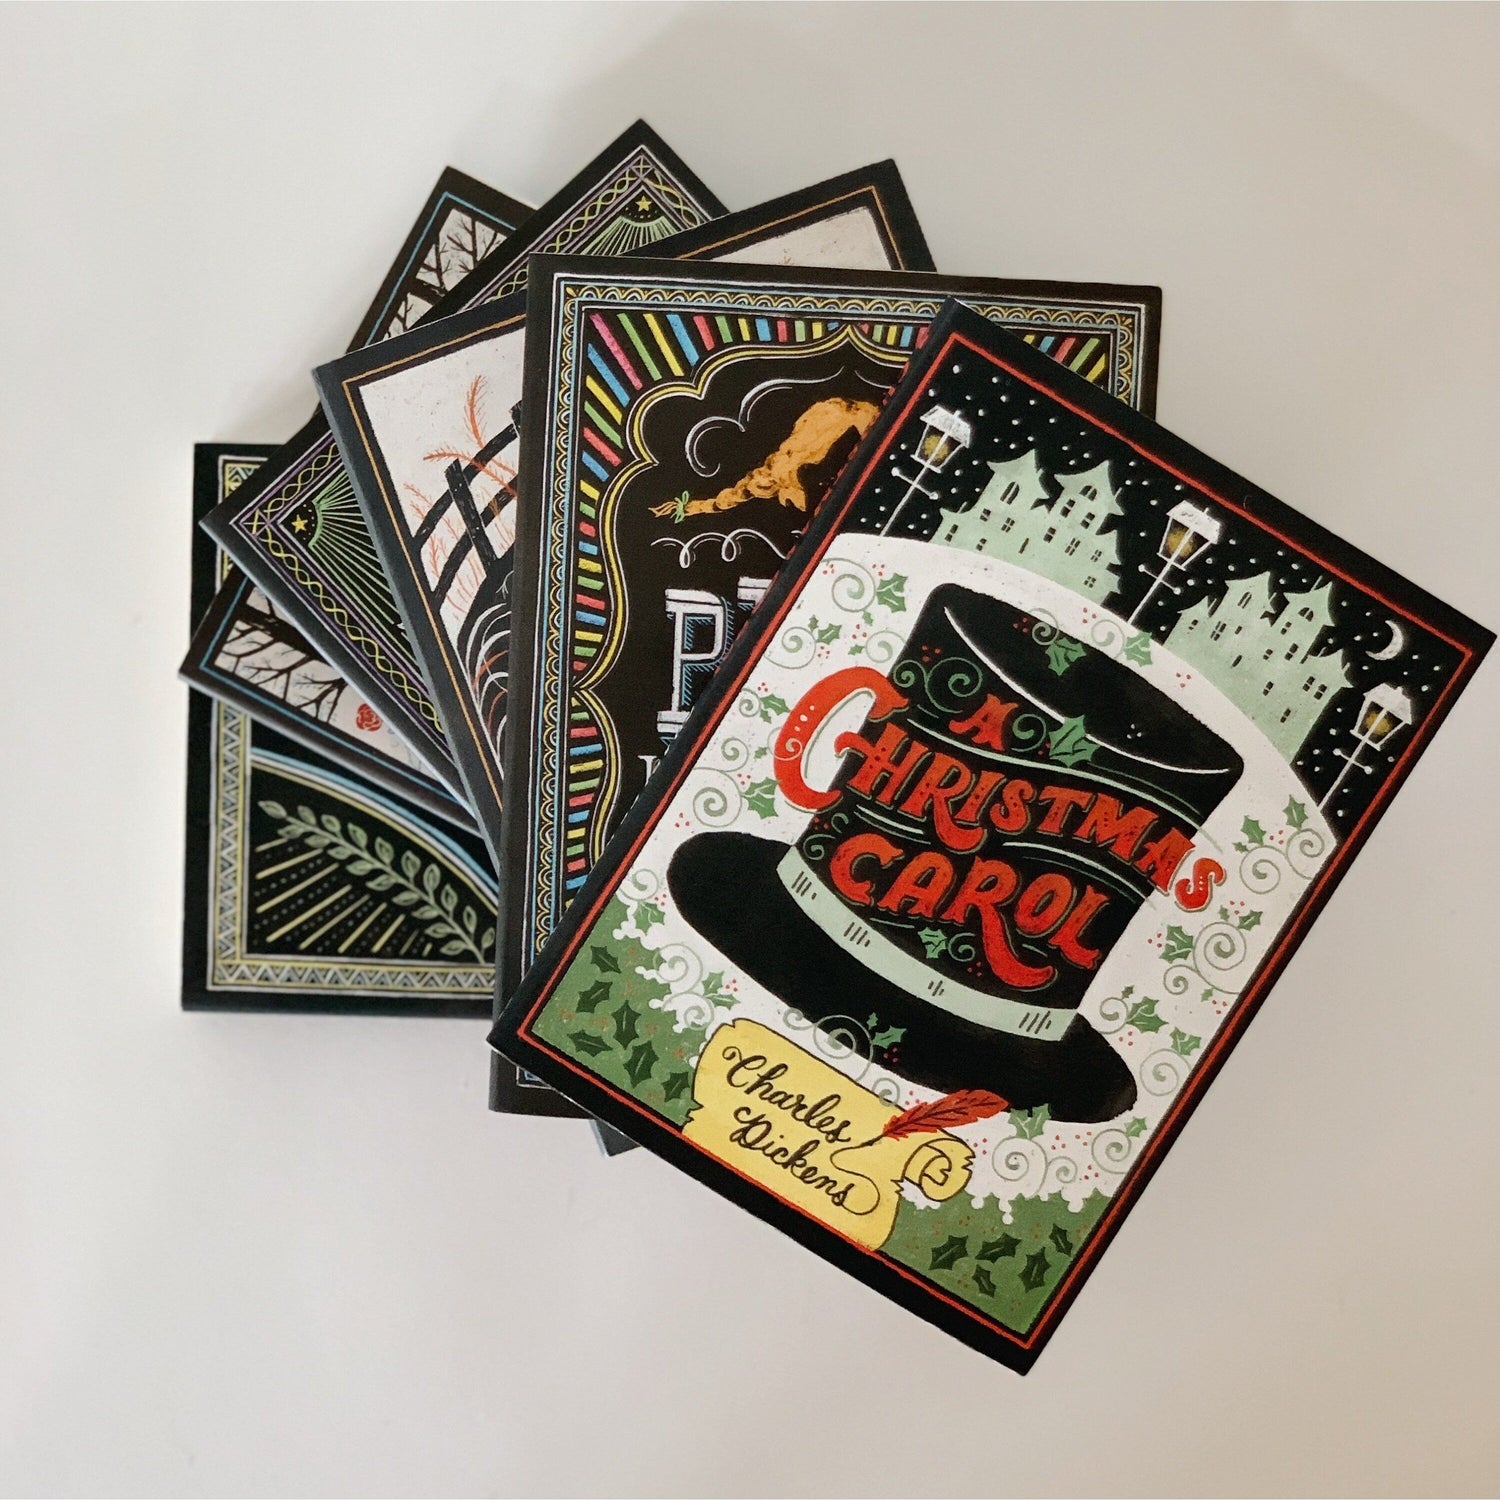 Puffin Chalk Children's Paperback Classics Books, Black Book Bundle for Shelf Stlinh